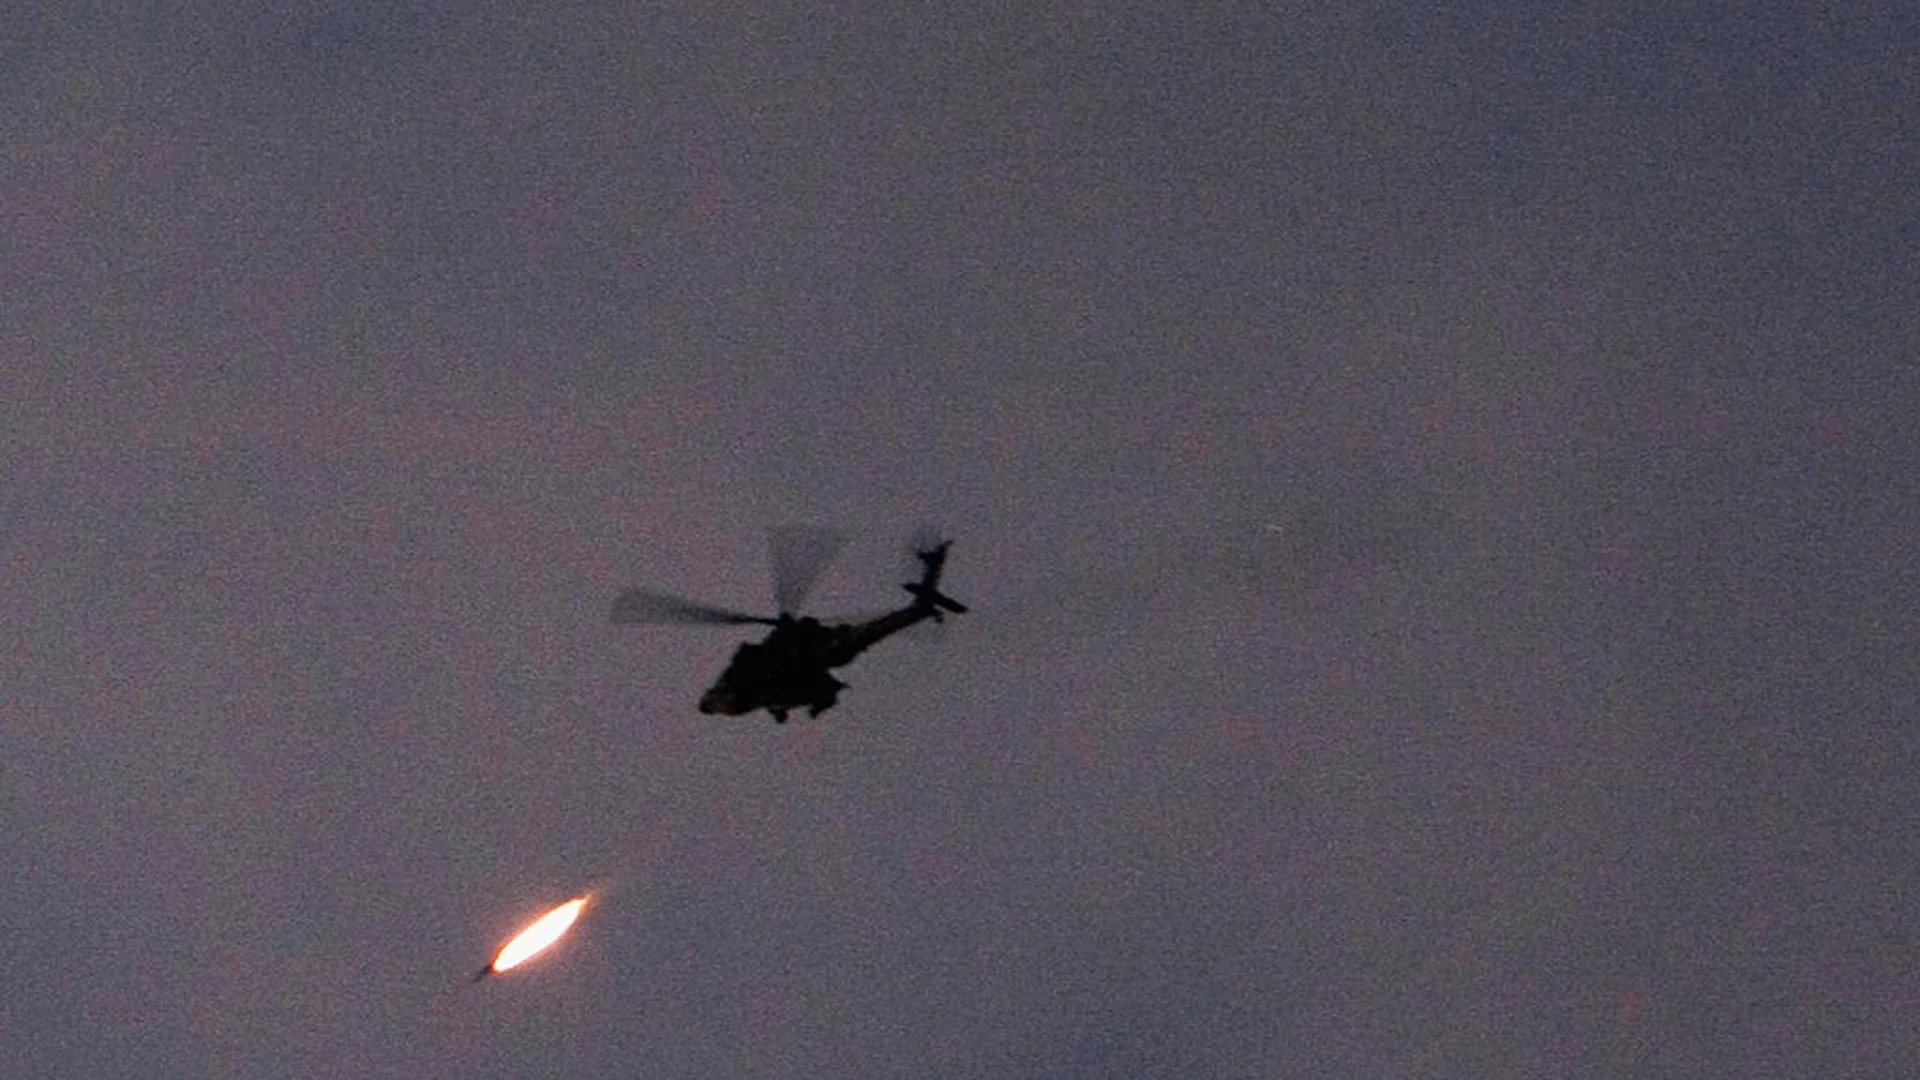 Украинците свалиха още един руски военен хеликоптер  "Алигатор"